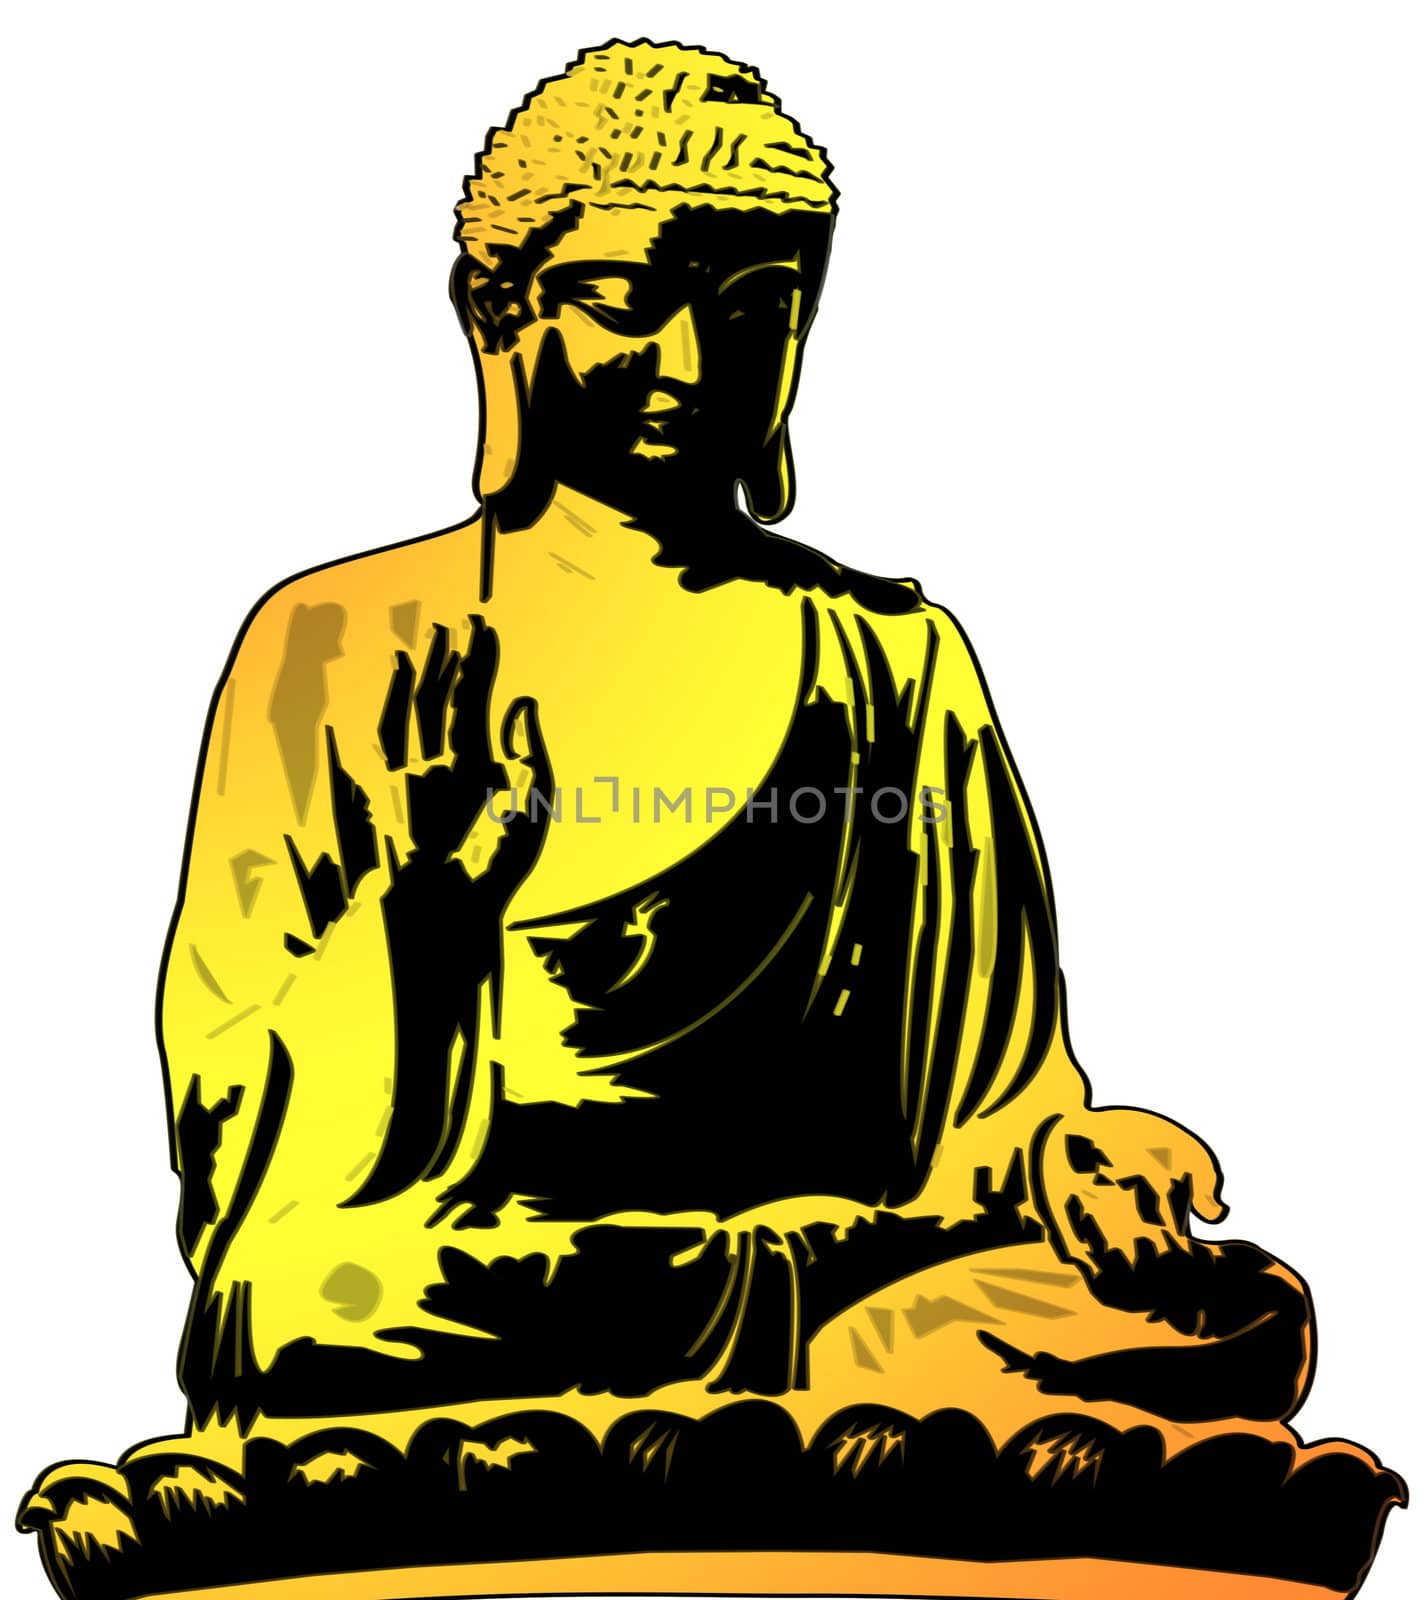 Golden Buddha Sitting Illustration on White Background by bobbigmac